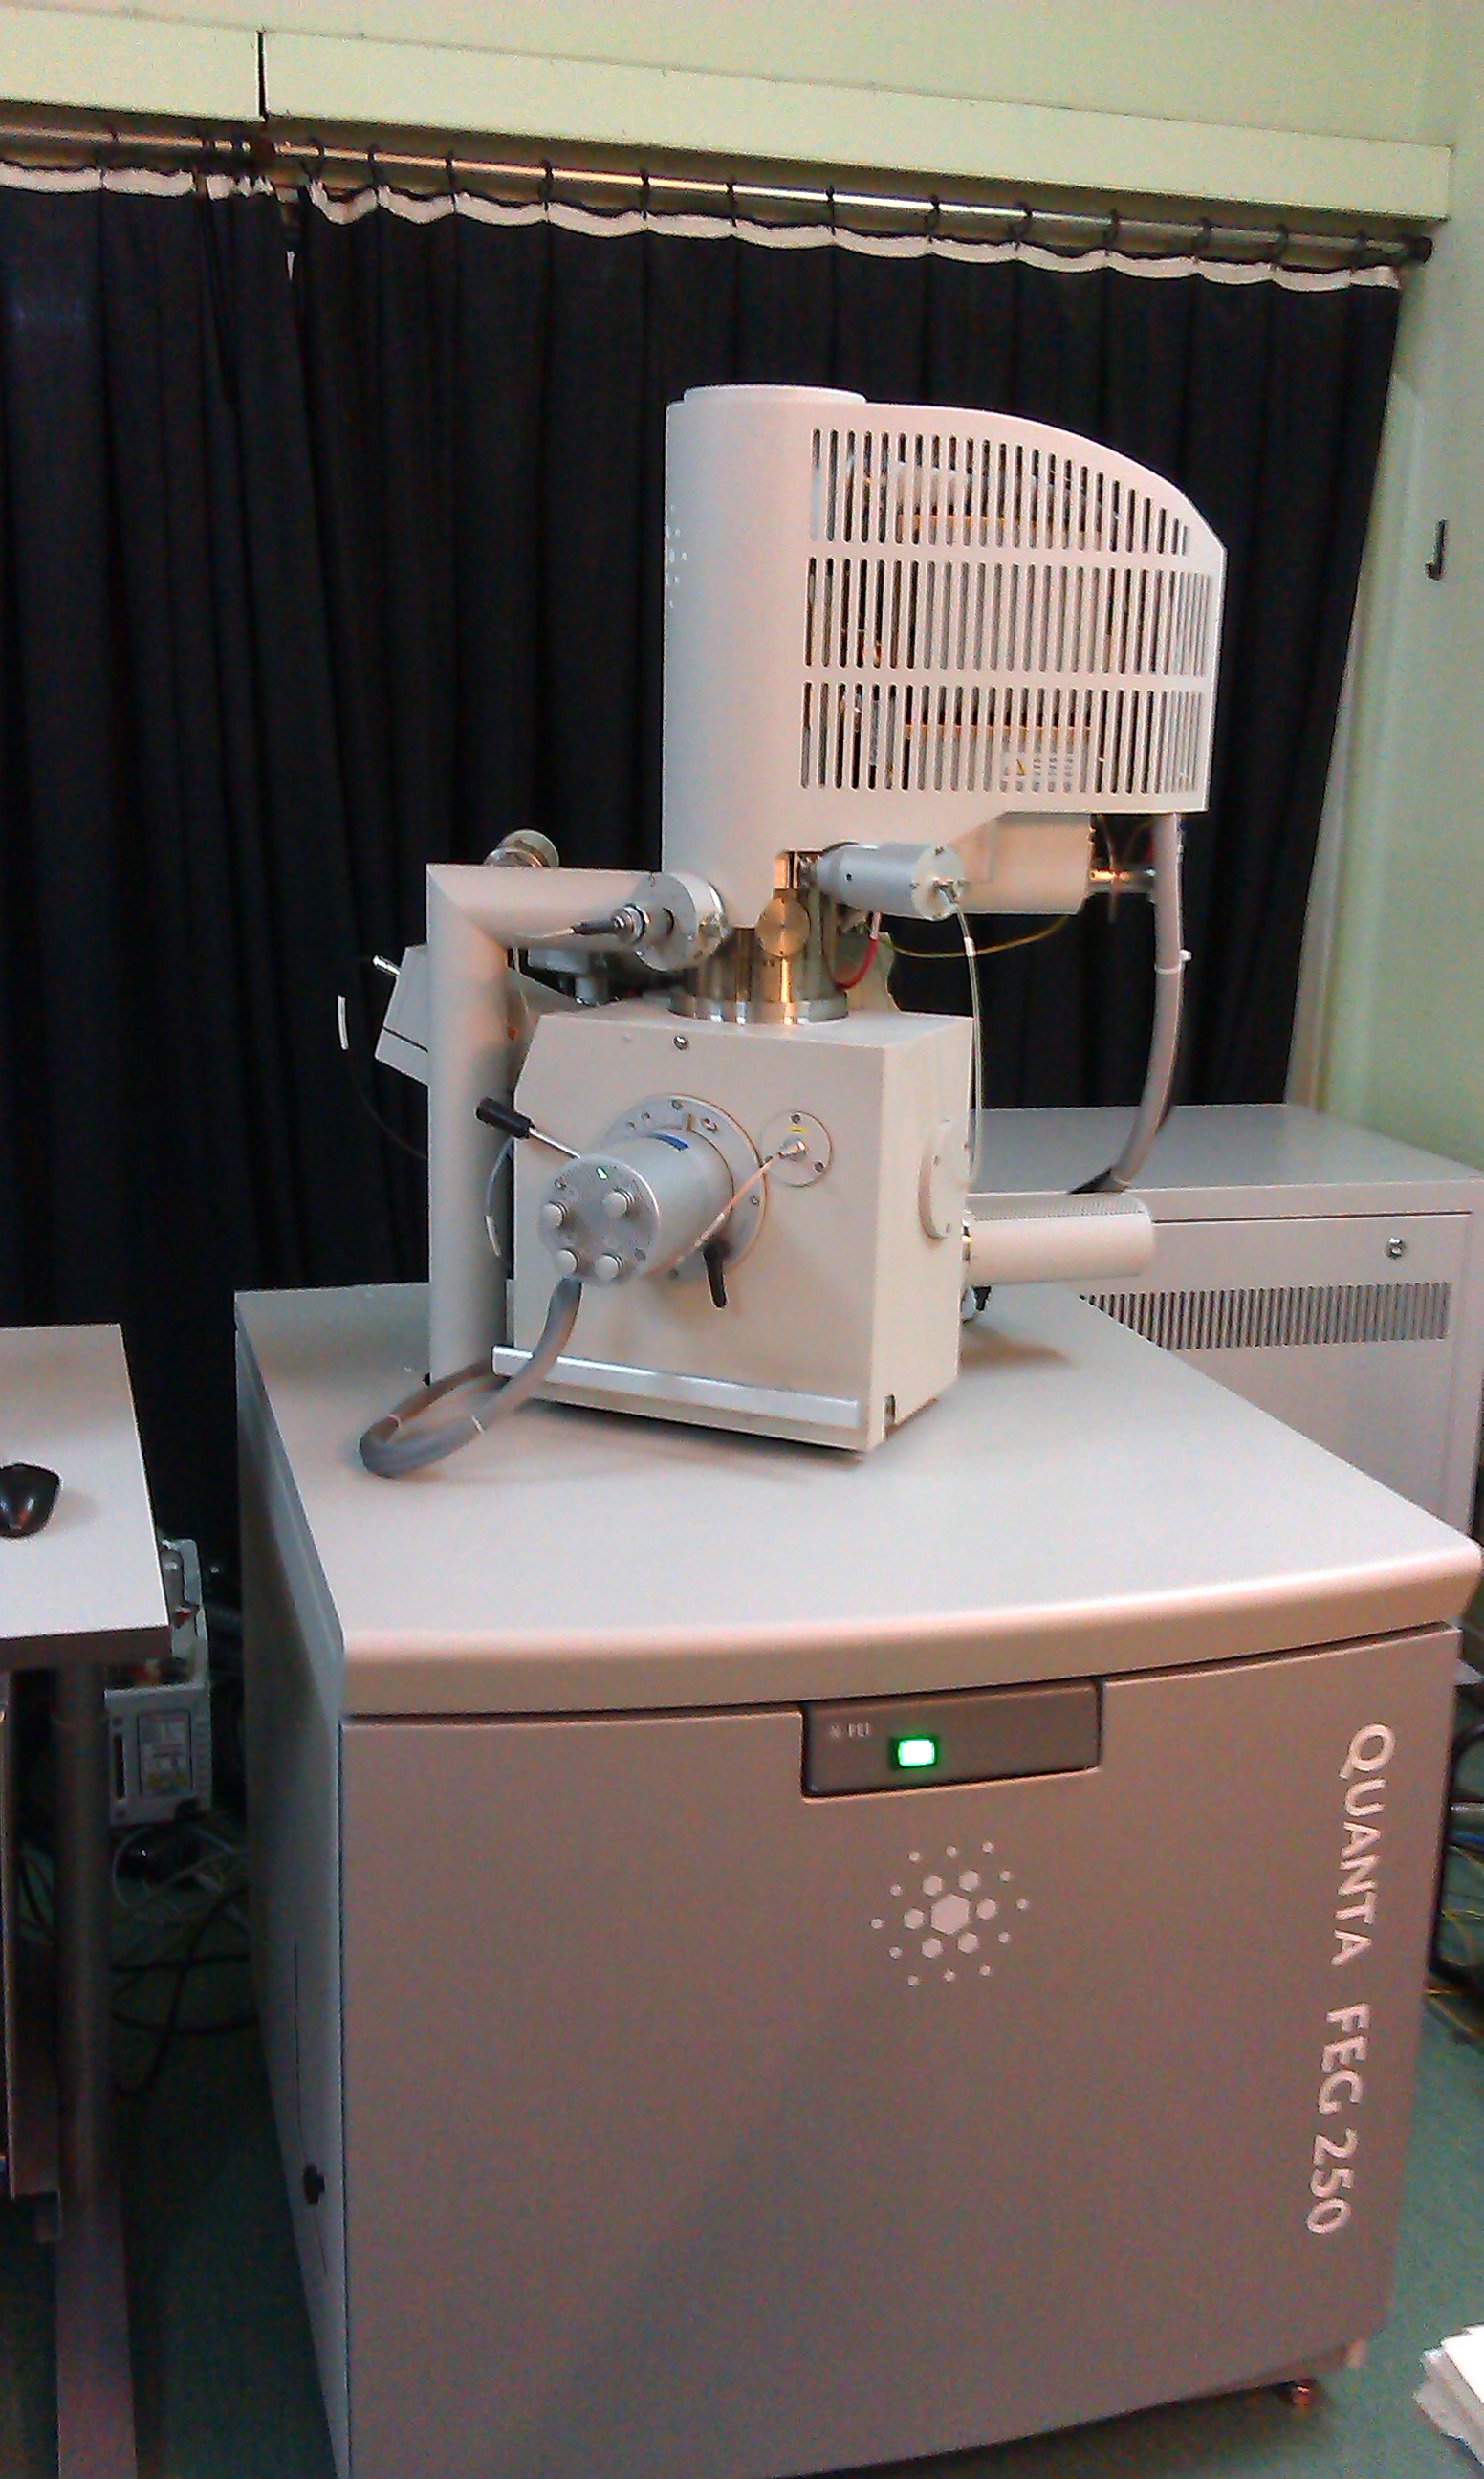 Field Emission Scanning Electron Microscopy instrument